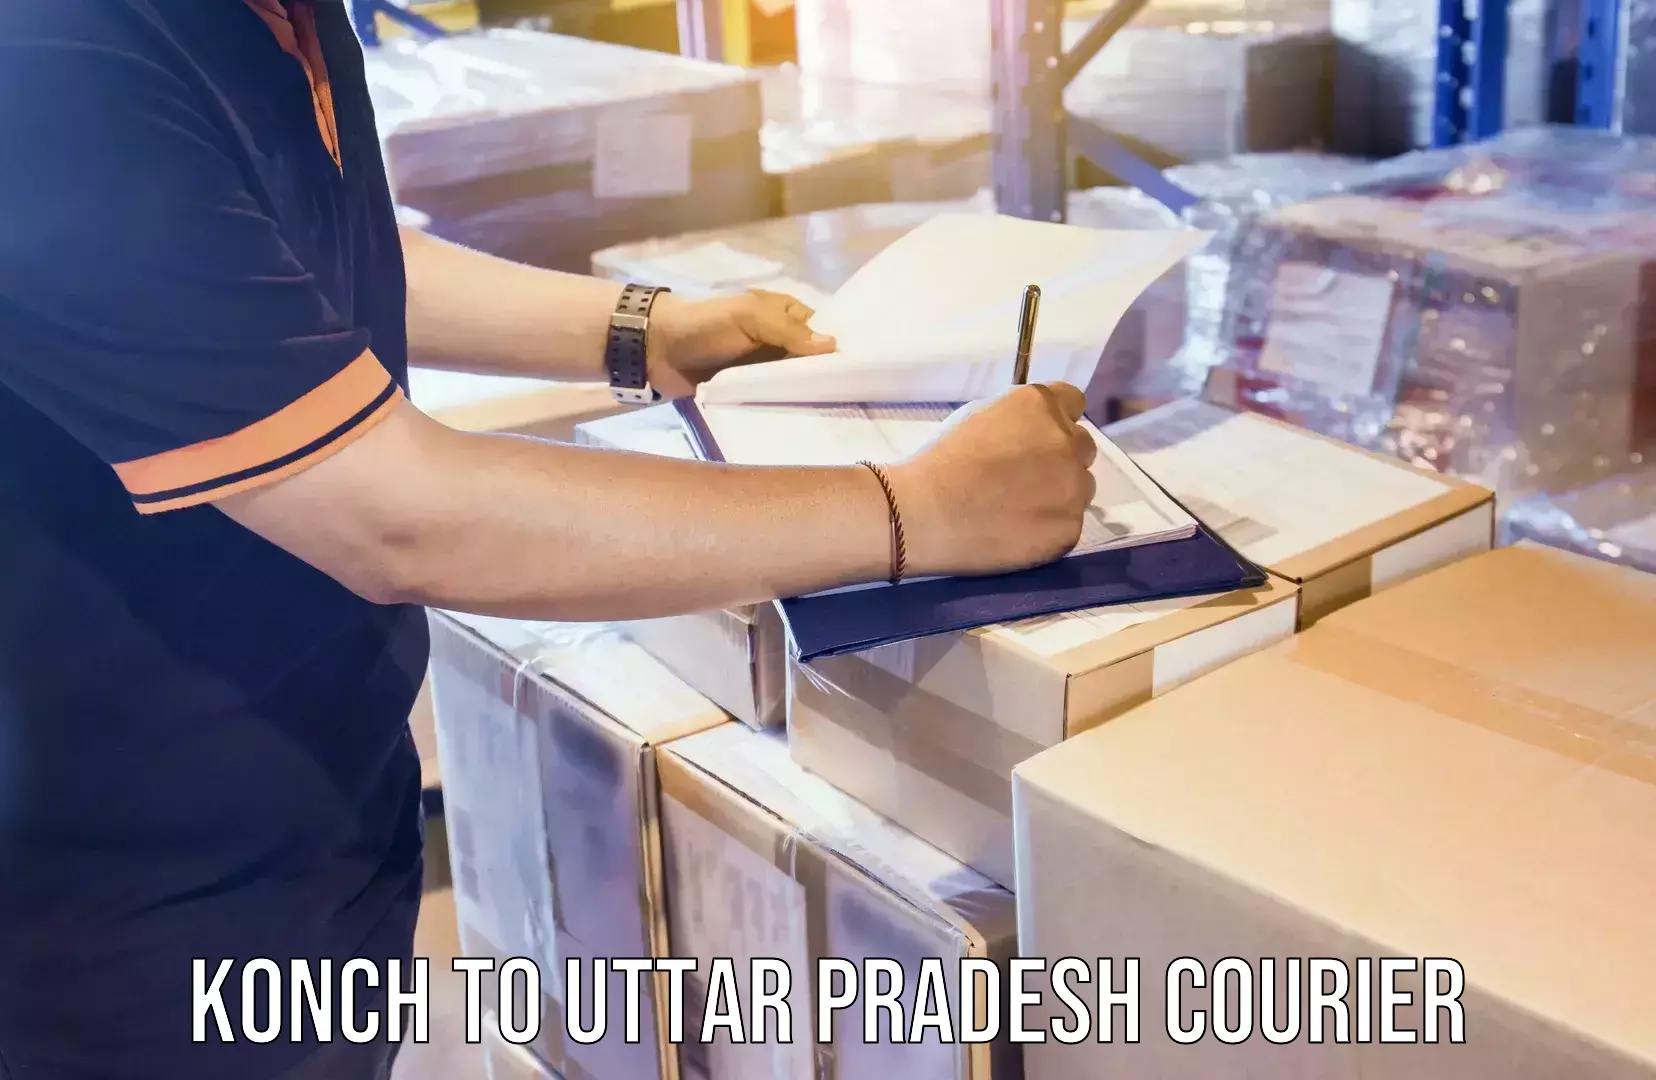 Specialized moving company Konch to Uttar Pradesh